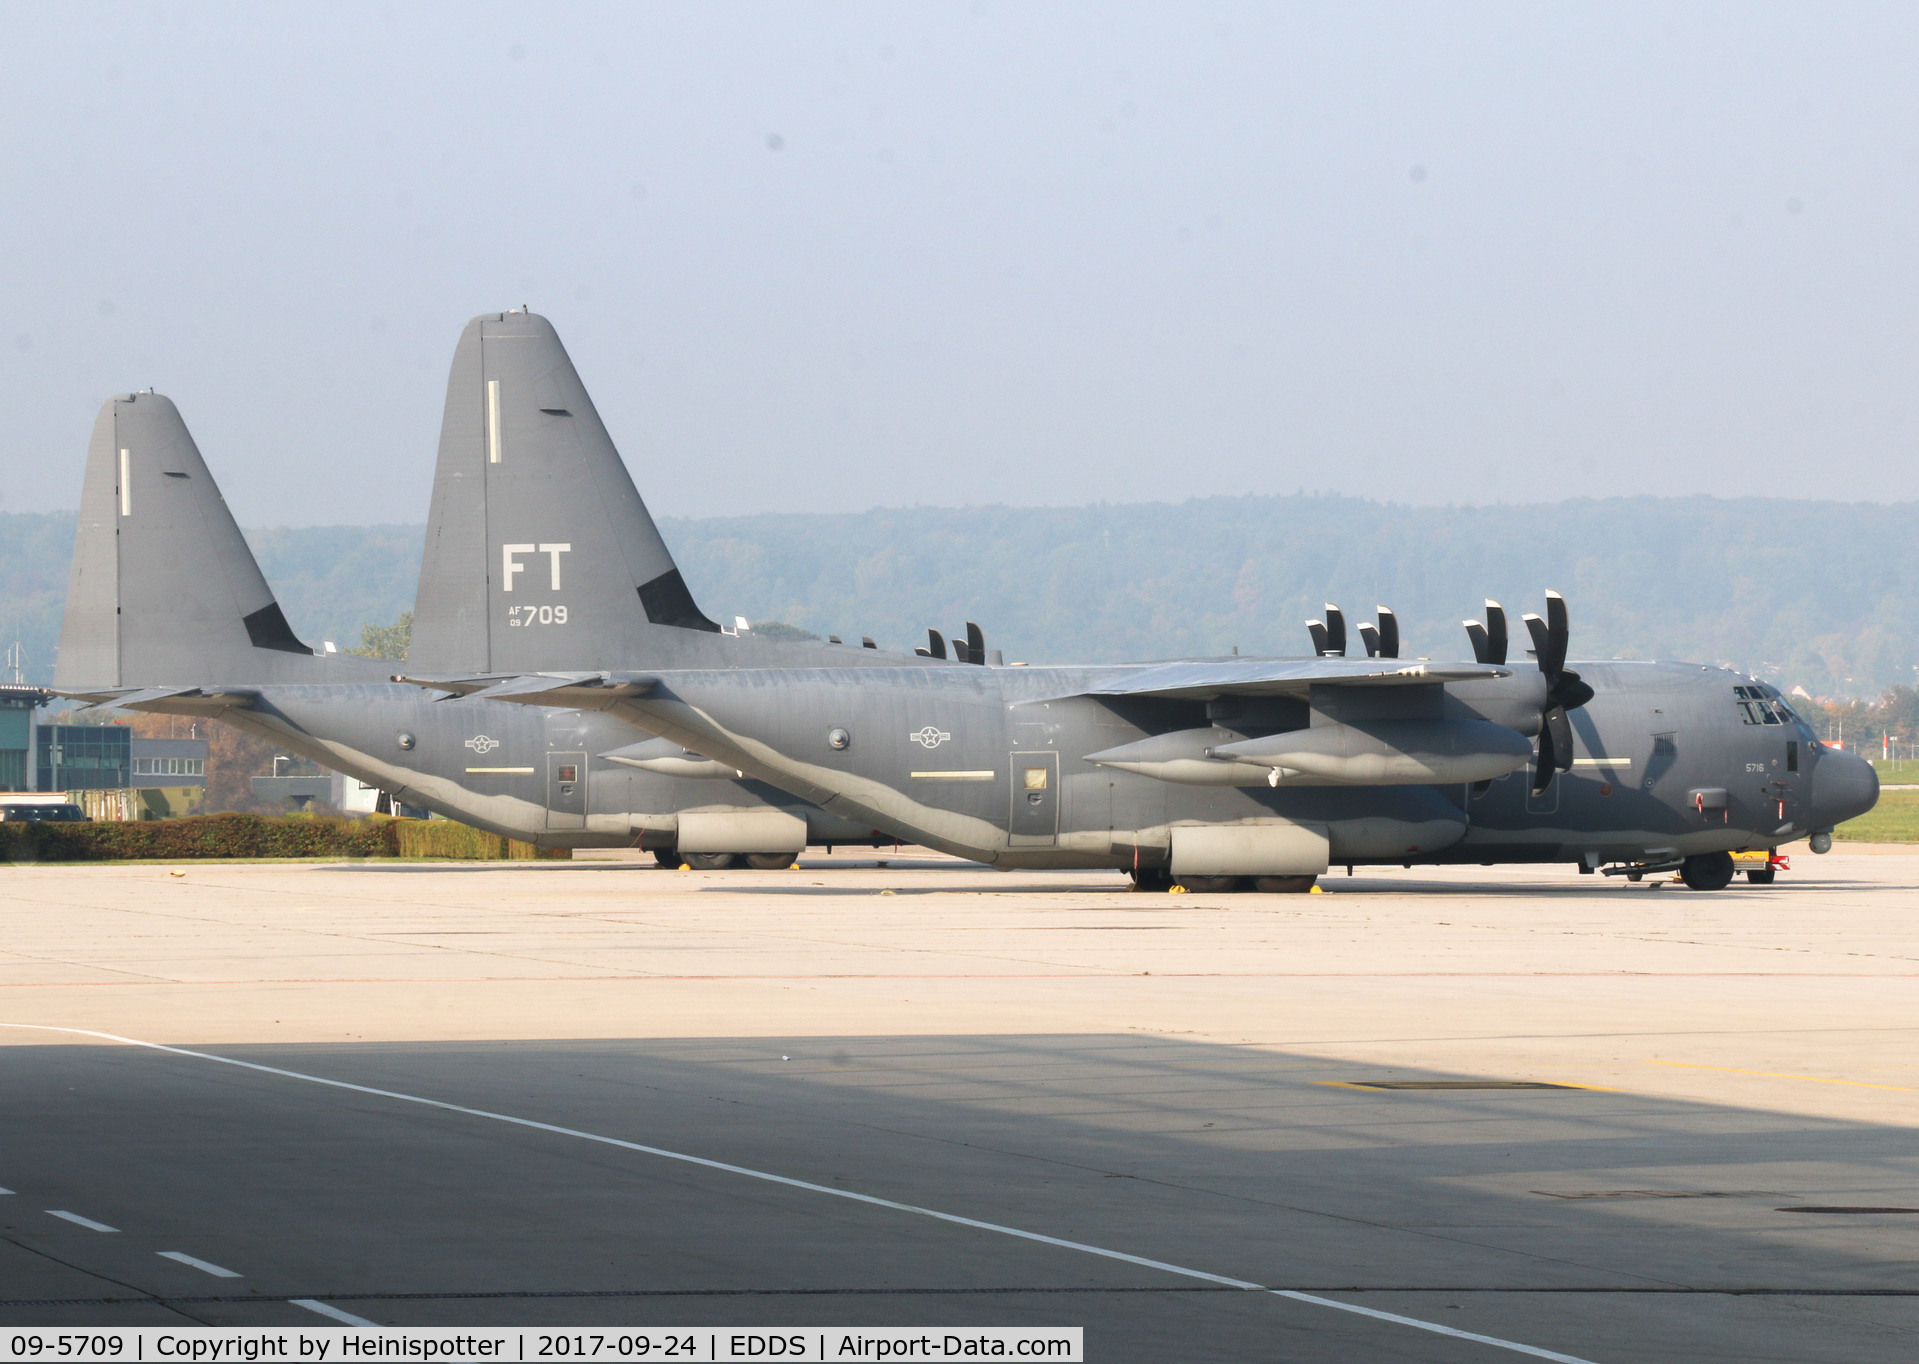 09-5709, Lockheed Martin HC-130J Combat King II Hercules C/N 382-5709, 09-5709 at Stuttgart Airport.